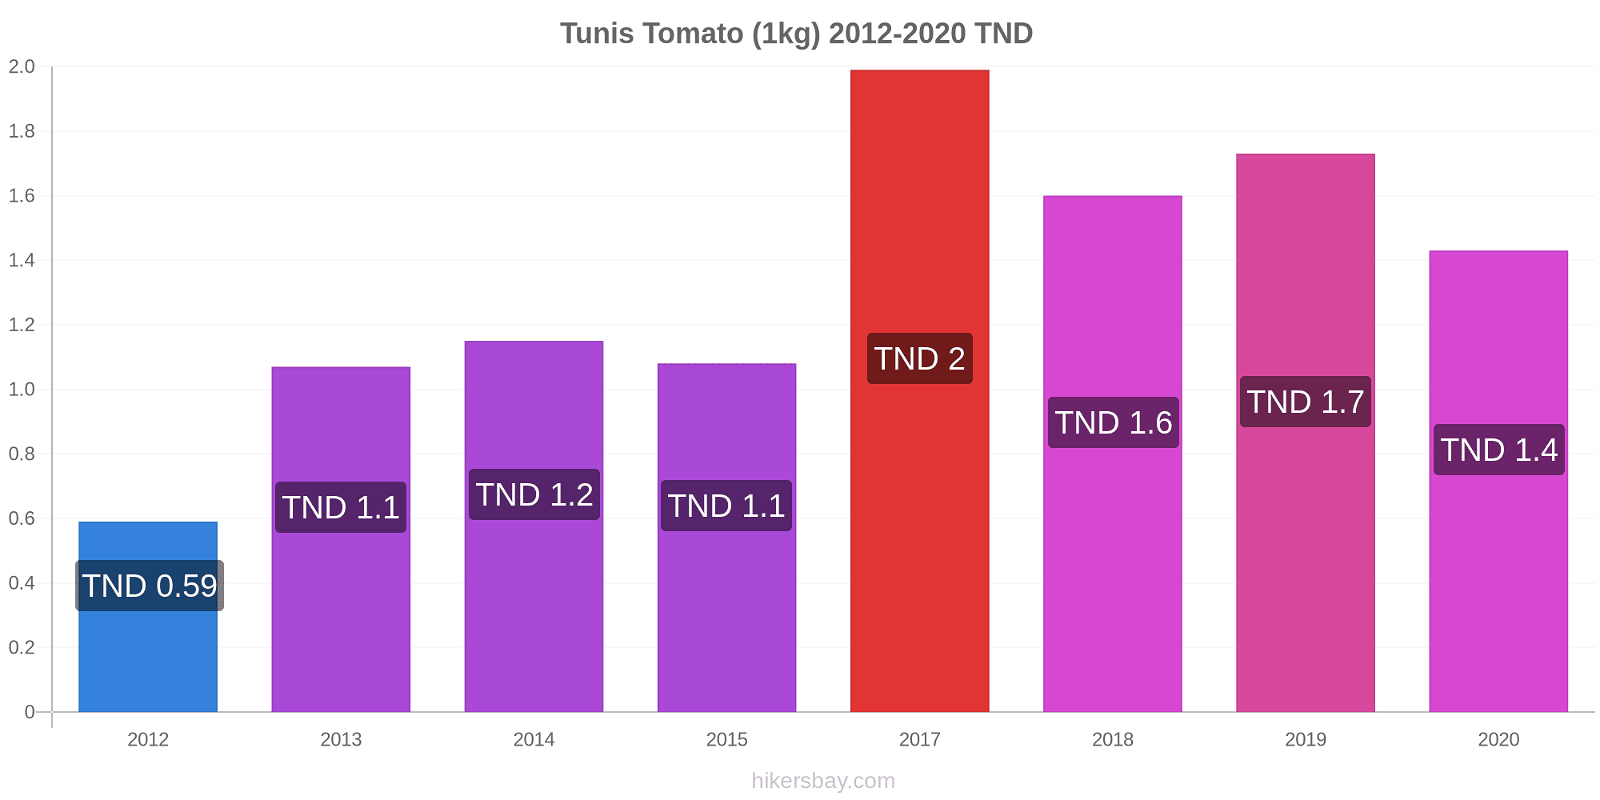 Tunis price changes Tomato (1kg) hikersbay.com